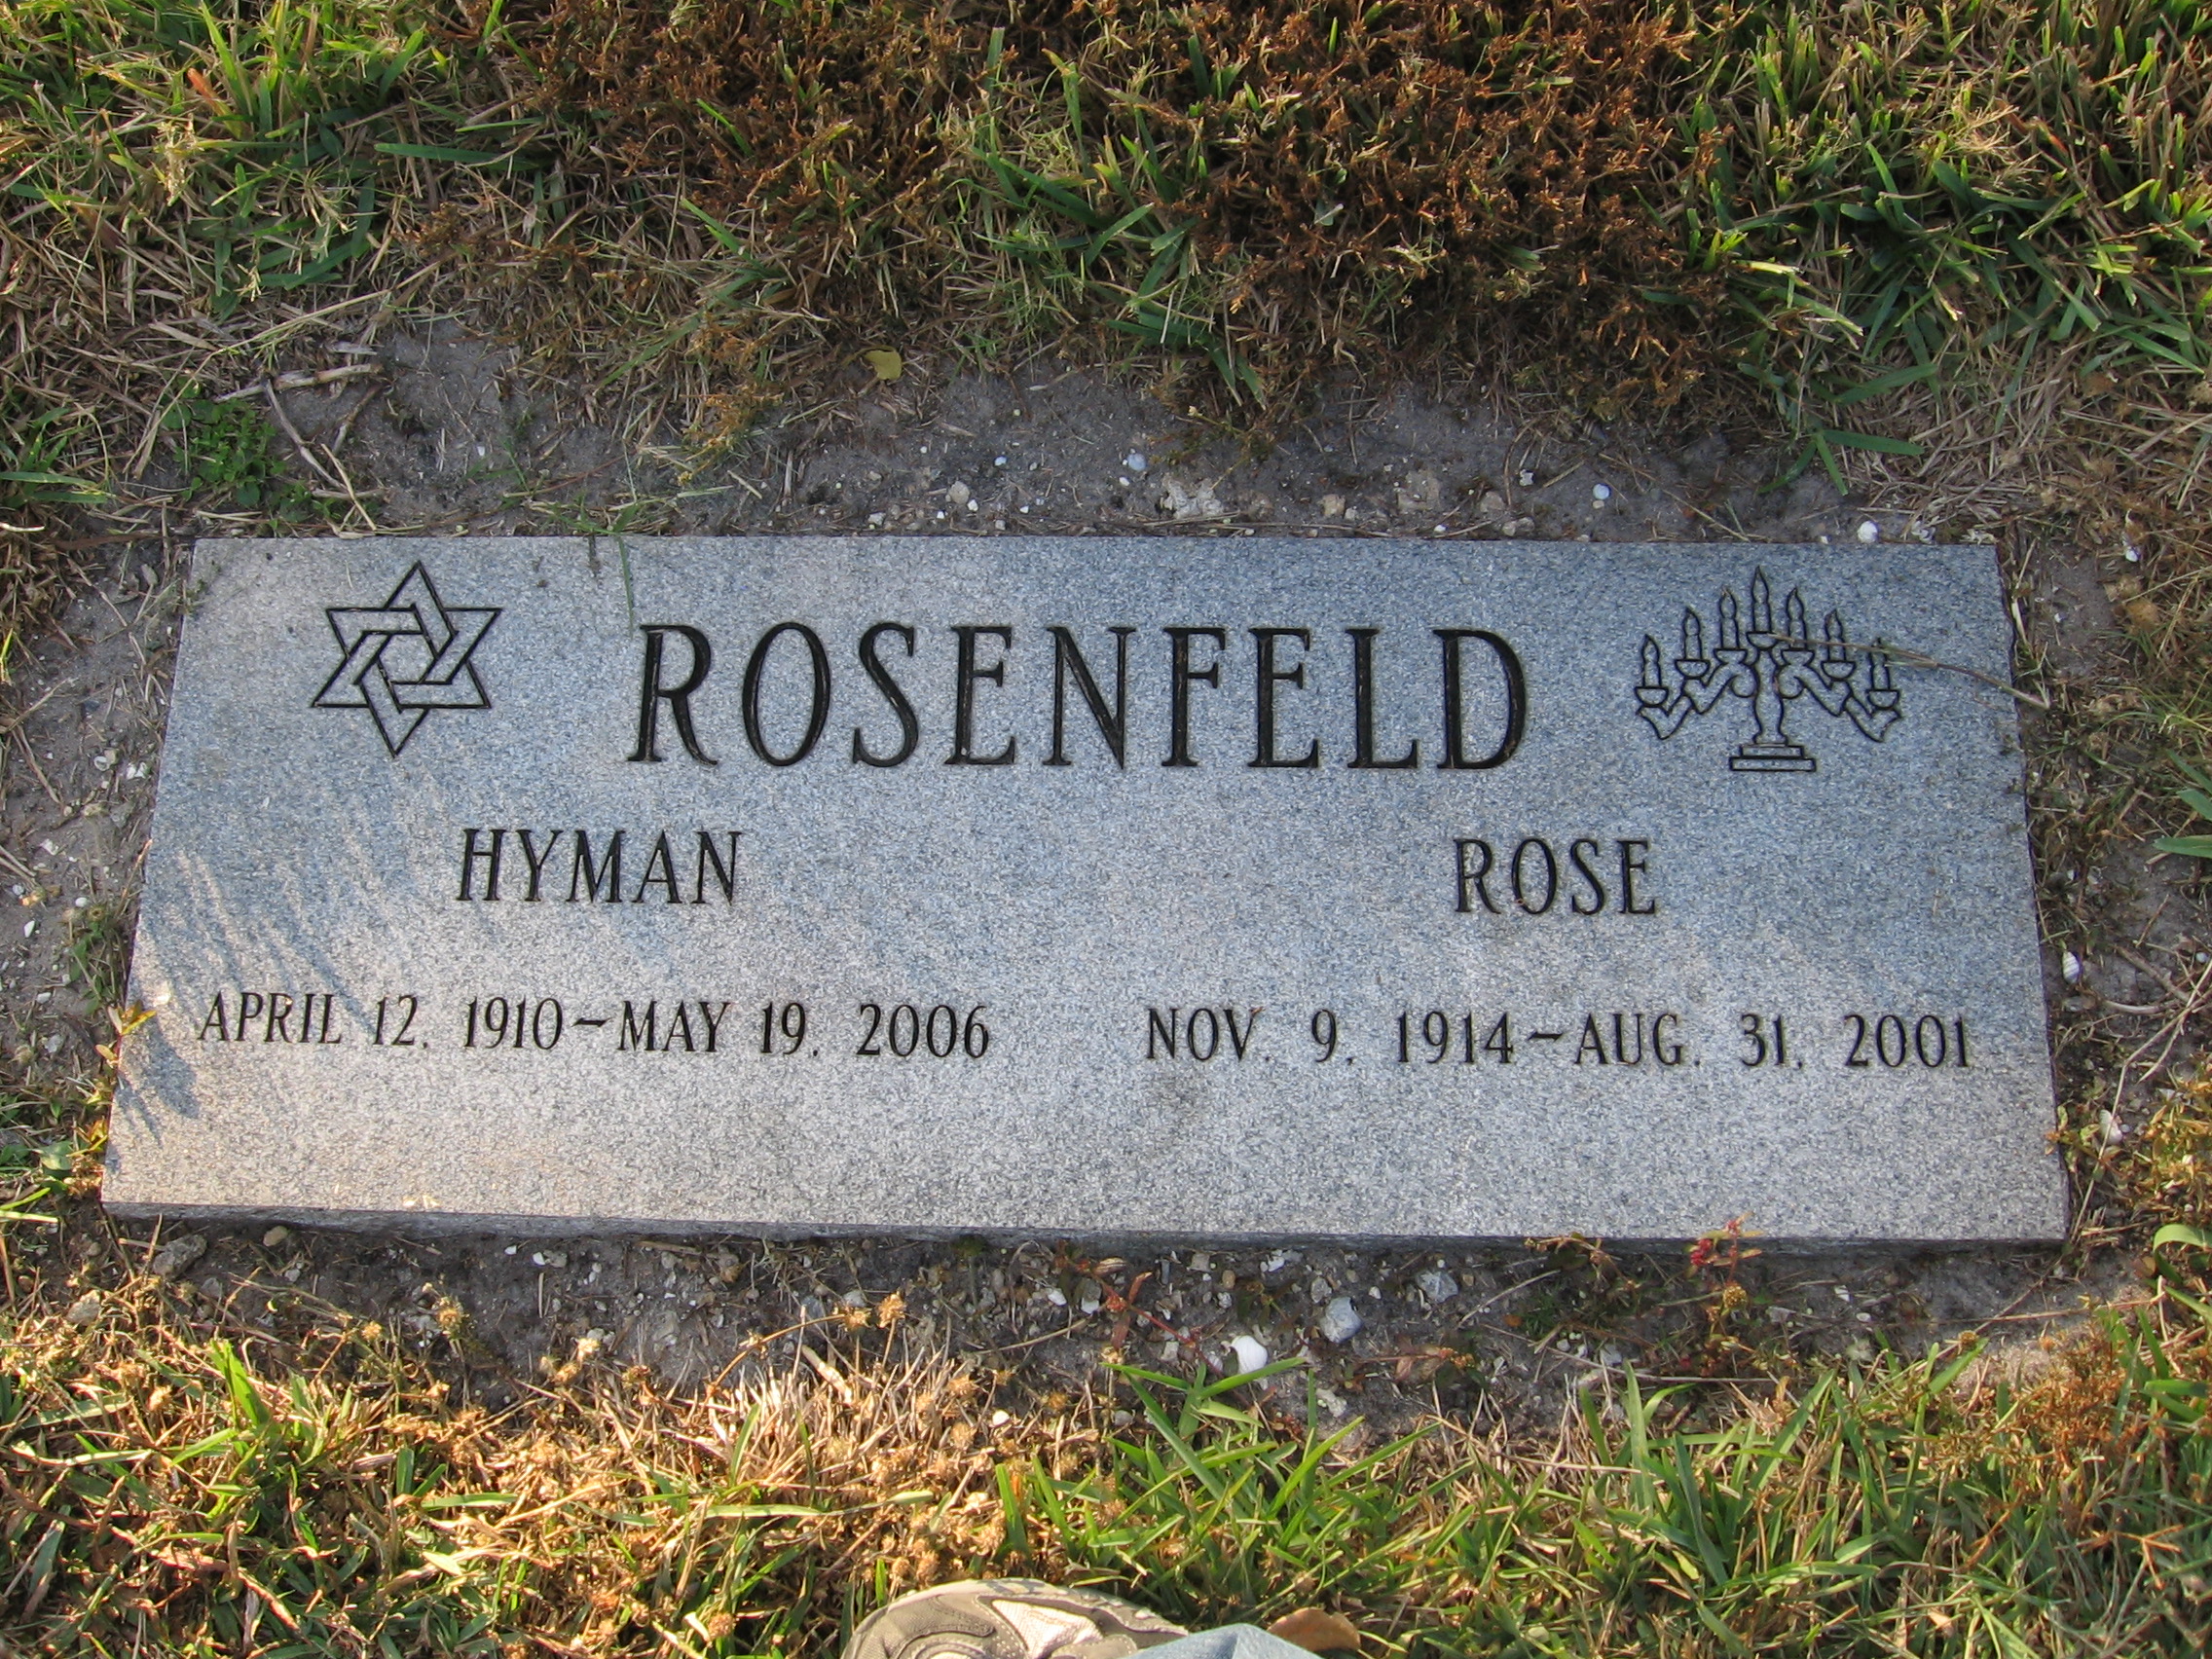 Hyman Rosenfeld